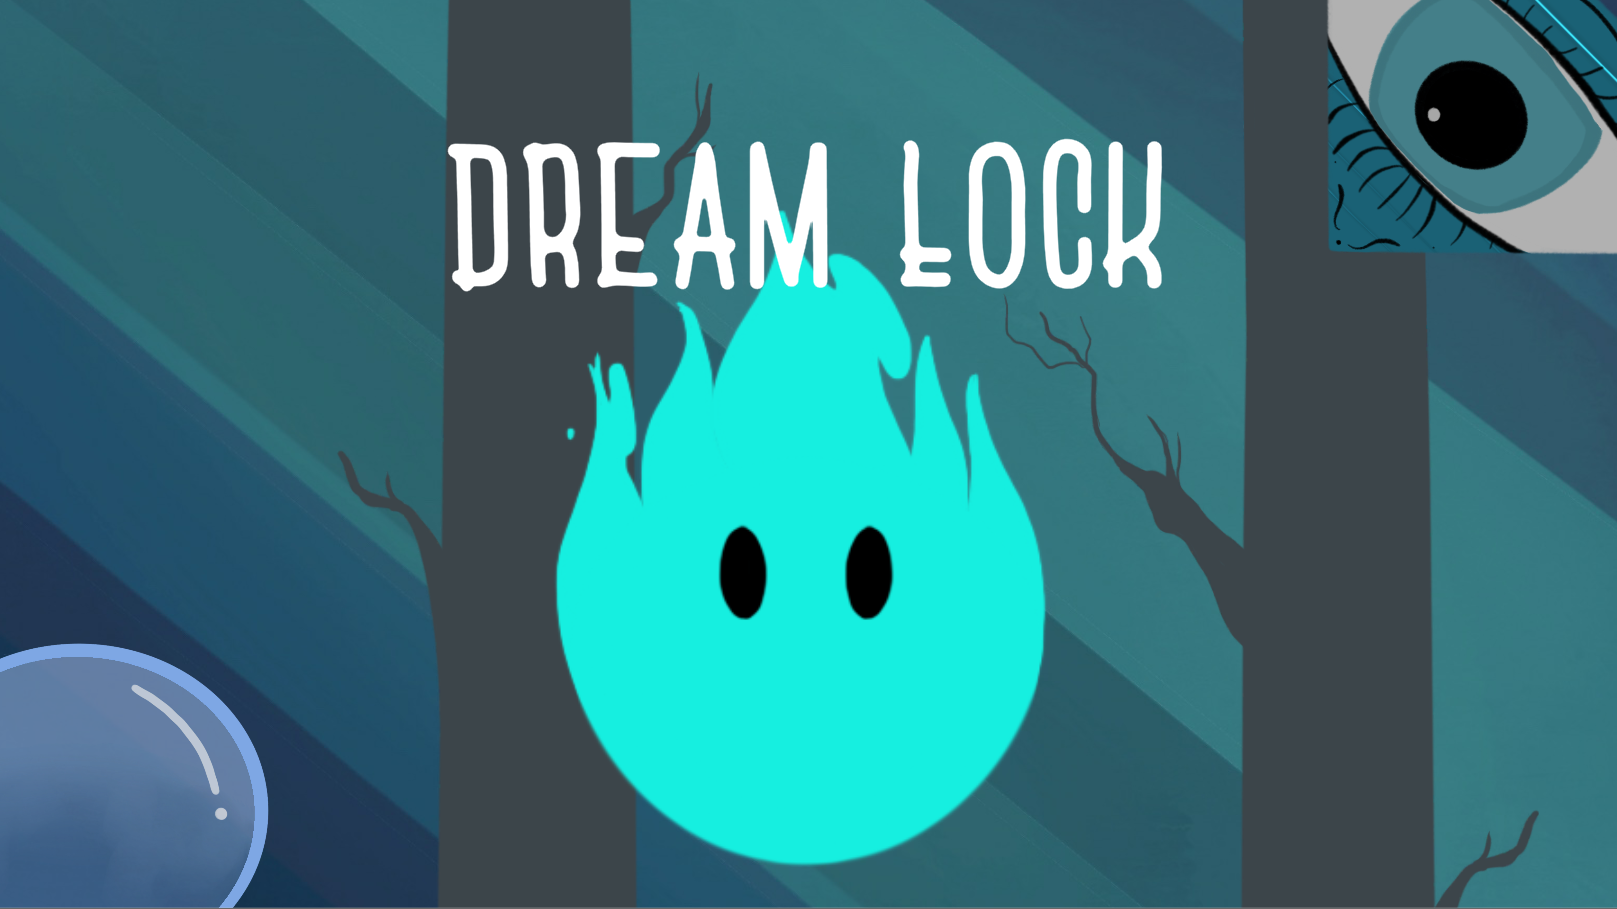 Dream Lock